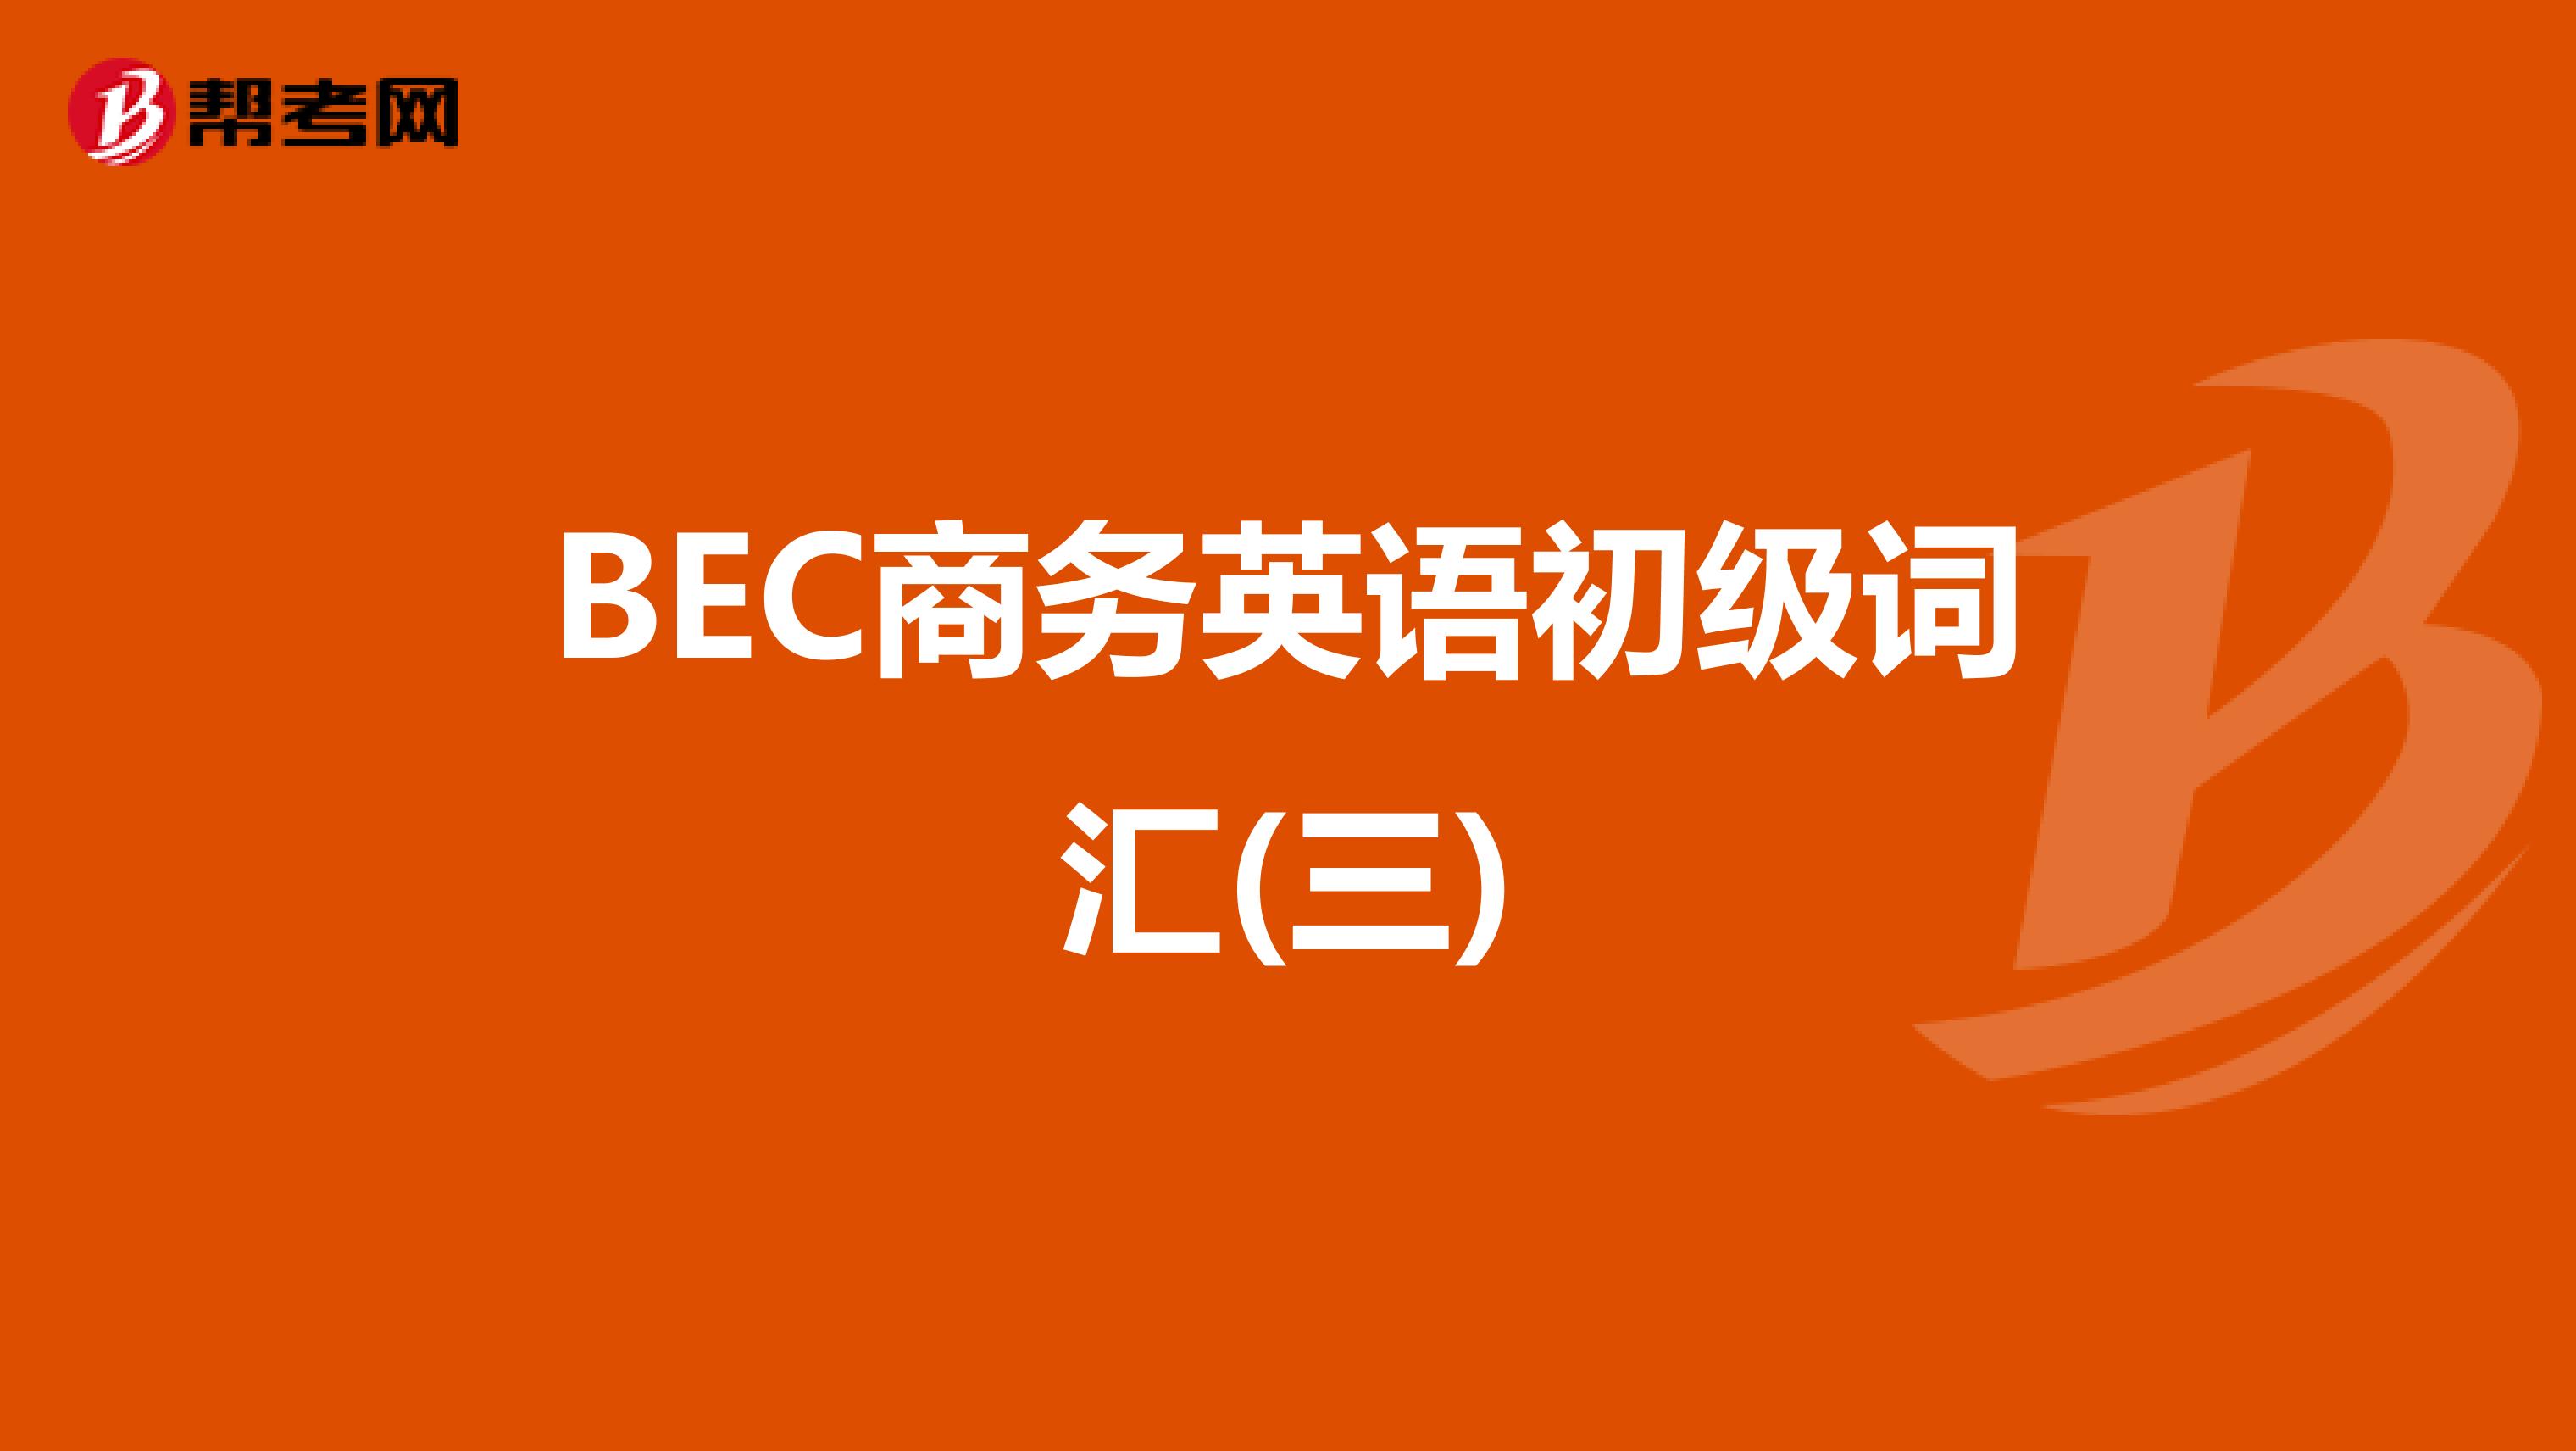   BEC商务英语初级词汇(三)